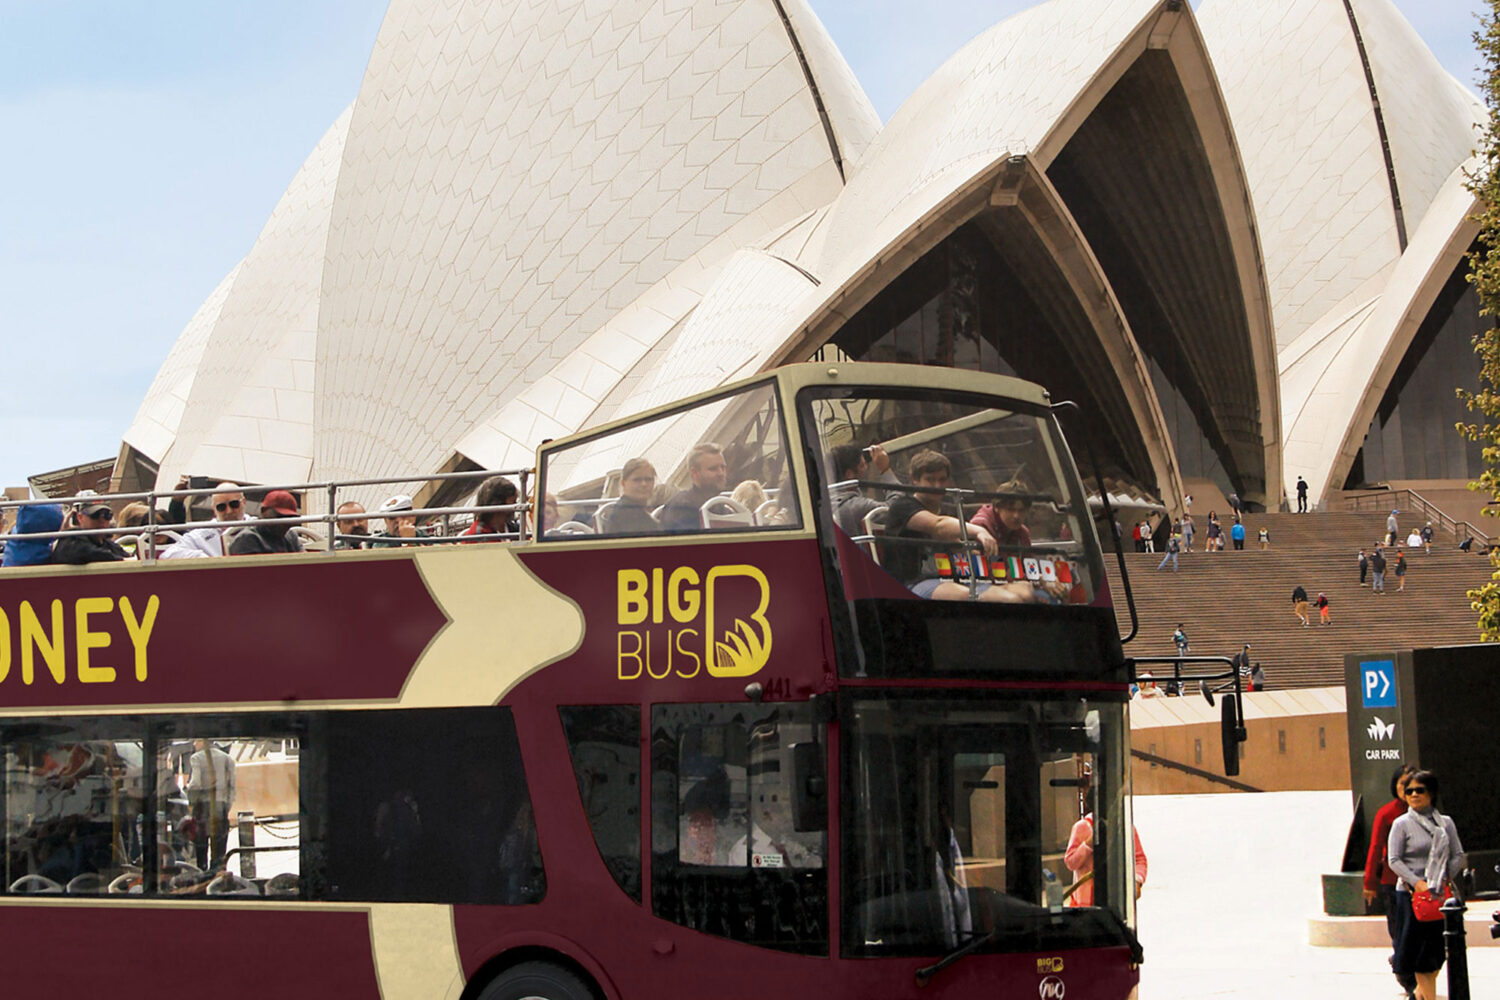 Big Bus Sydney at Opera House